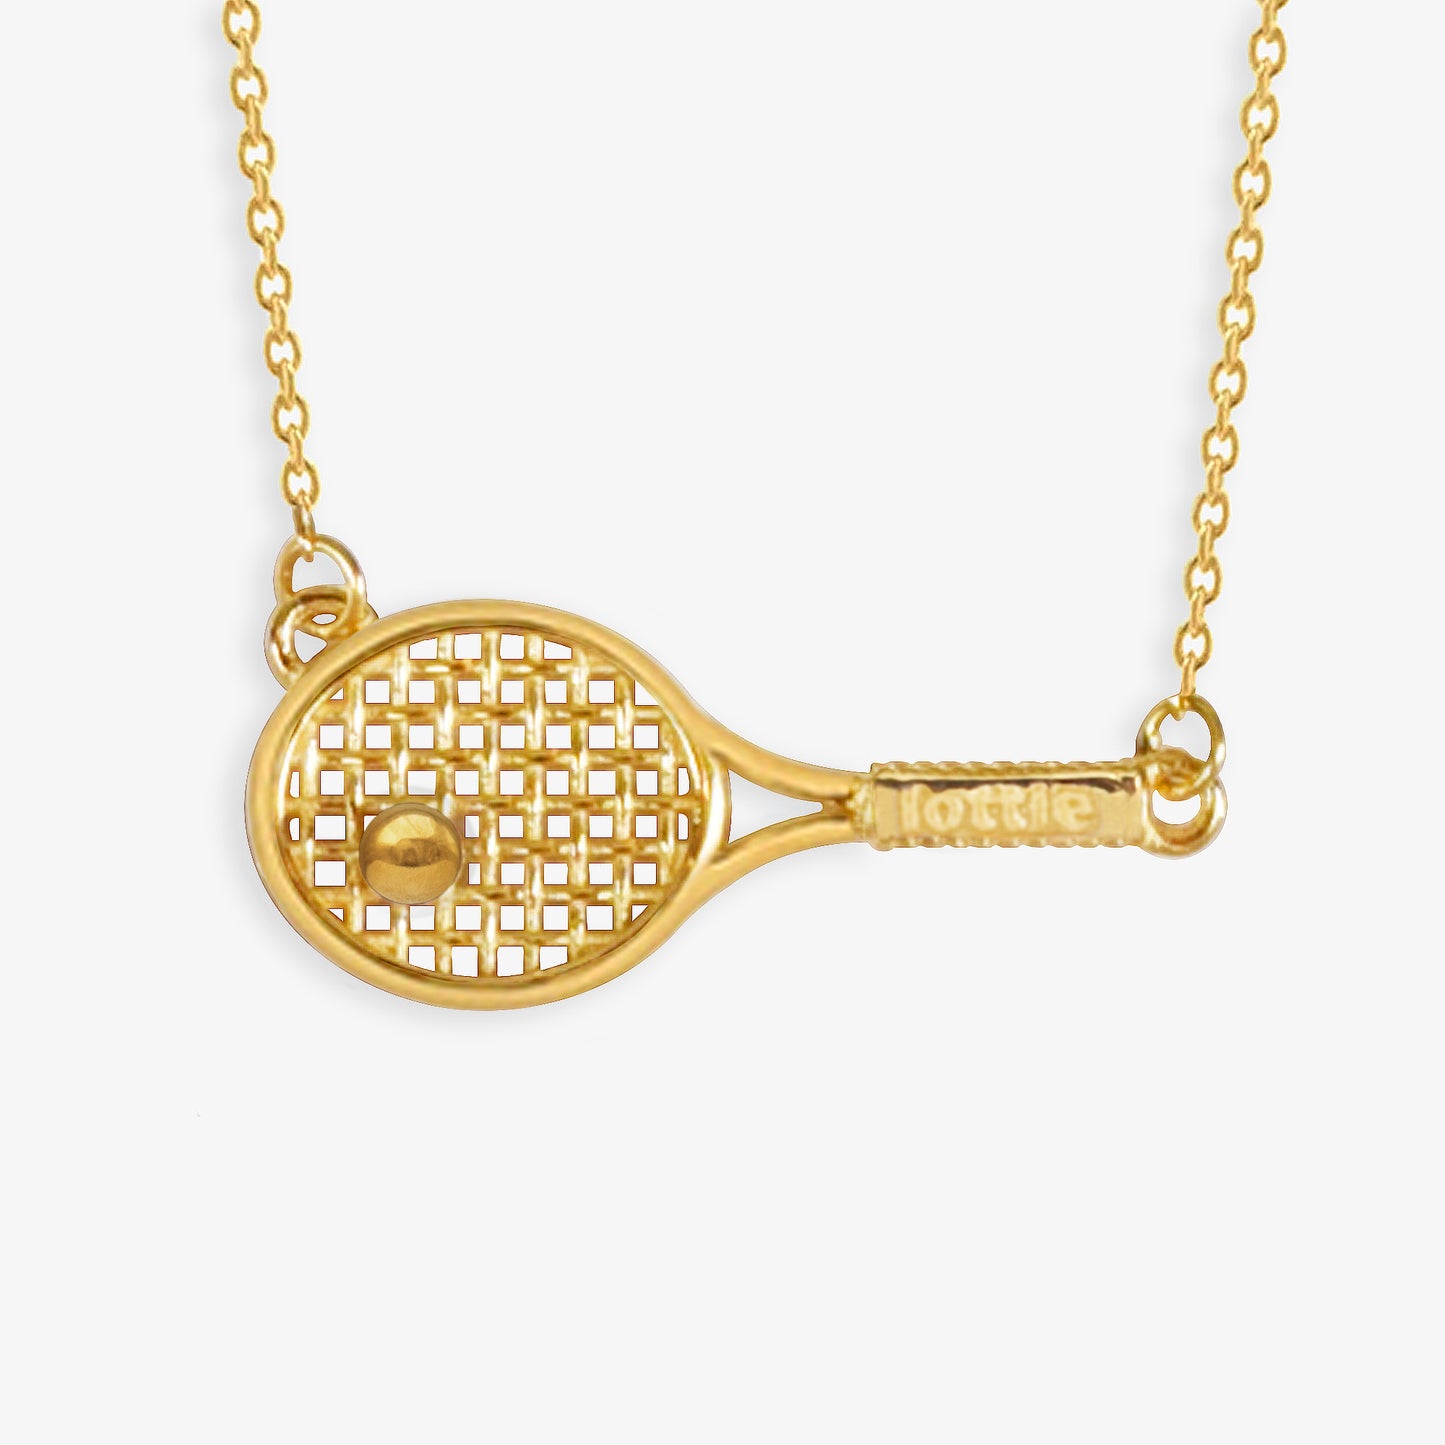 lottie tennis necklace, gold tennis racket necklace, morgan riddle necklace, tenniscore